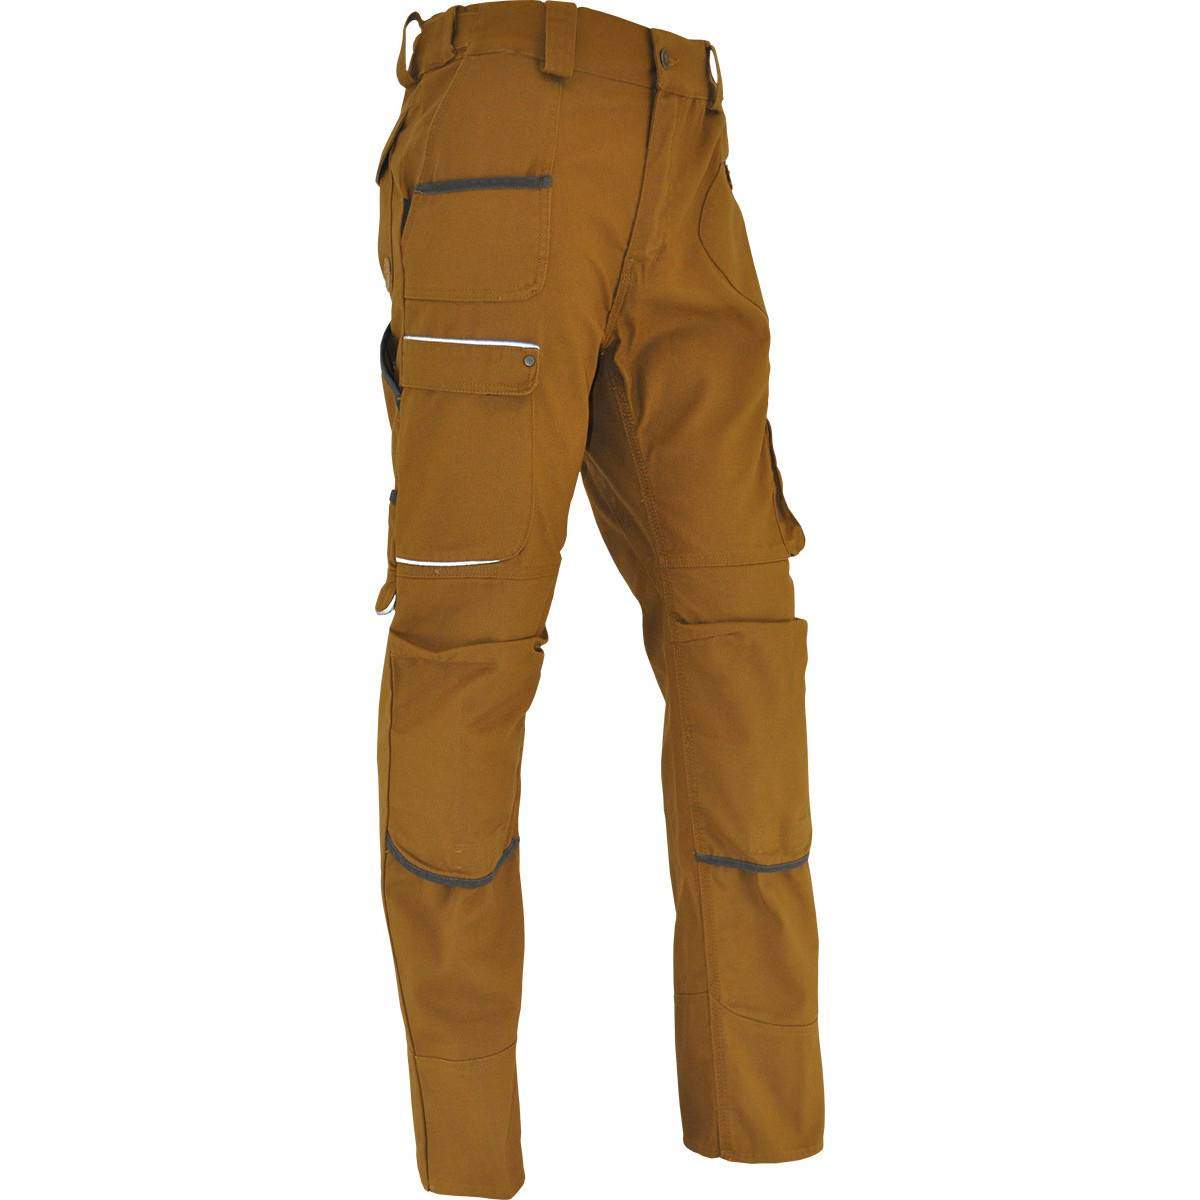 Pantalones de trabajo SAHARA talla 38, bronce